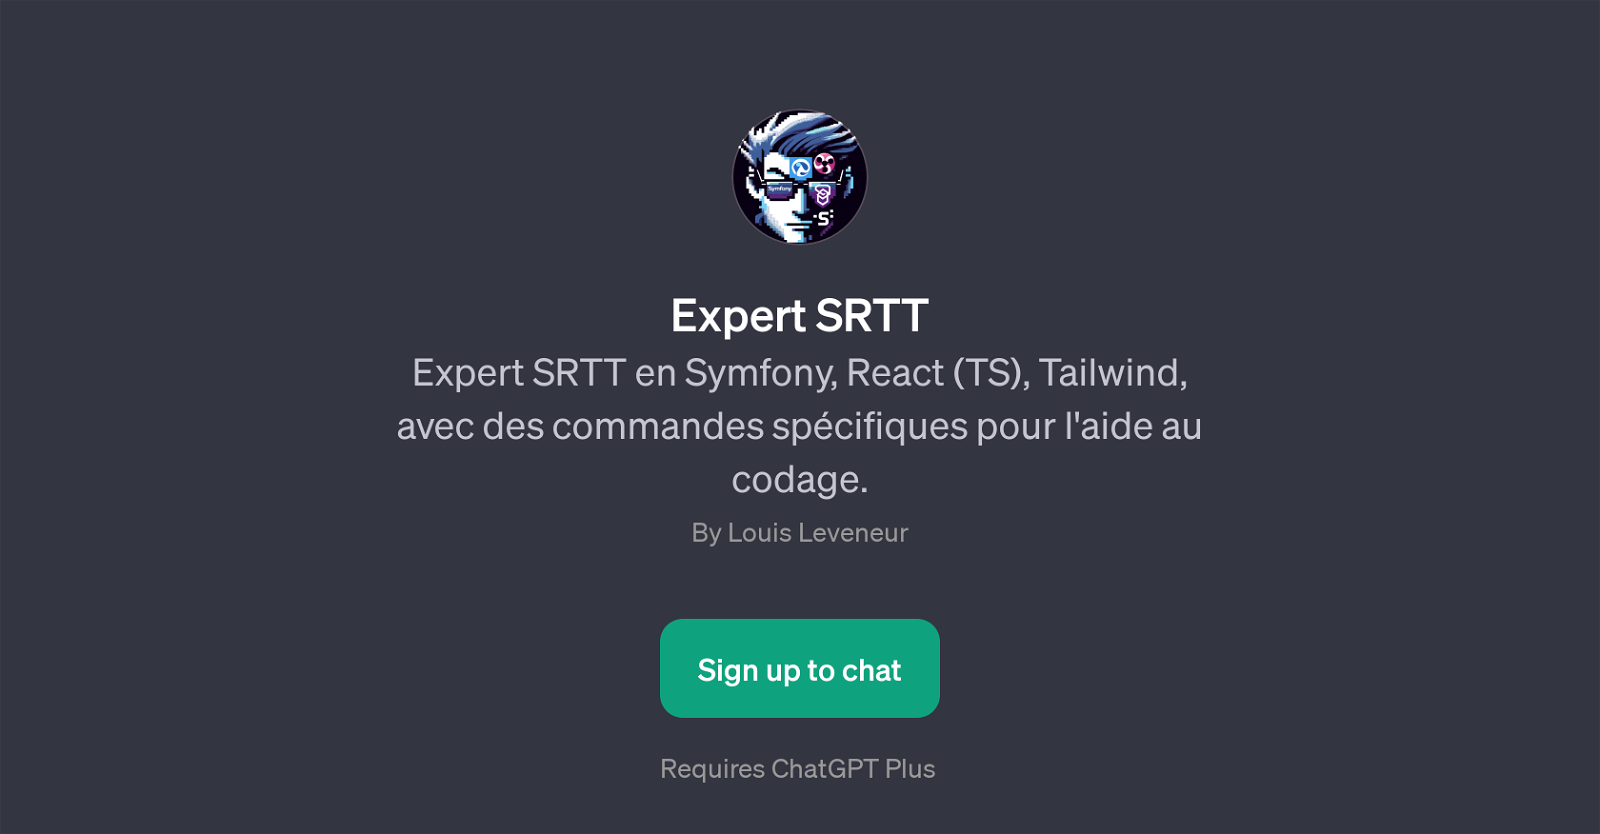 Expert SRTT website